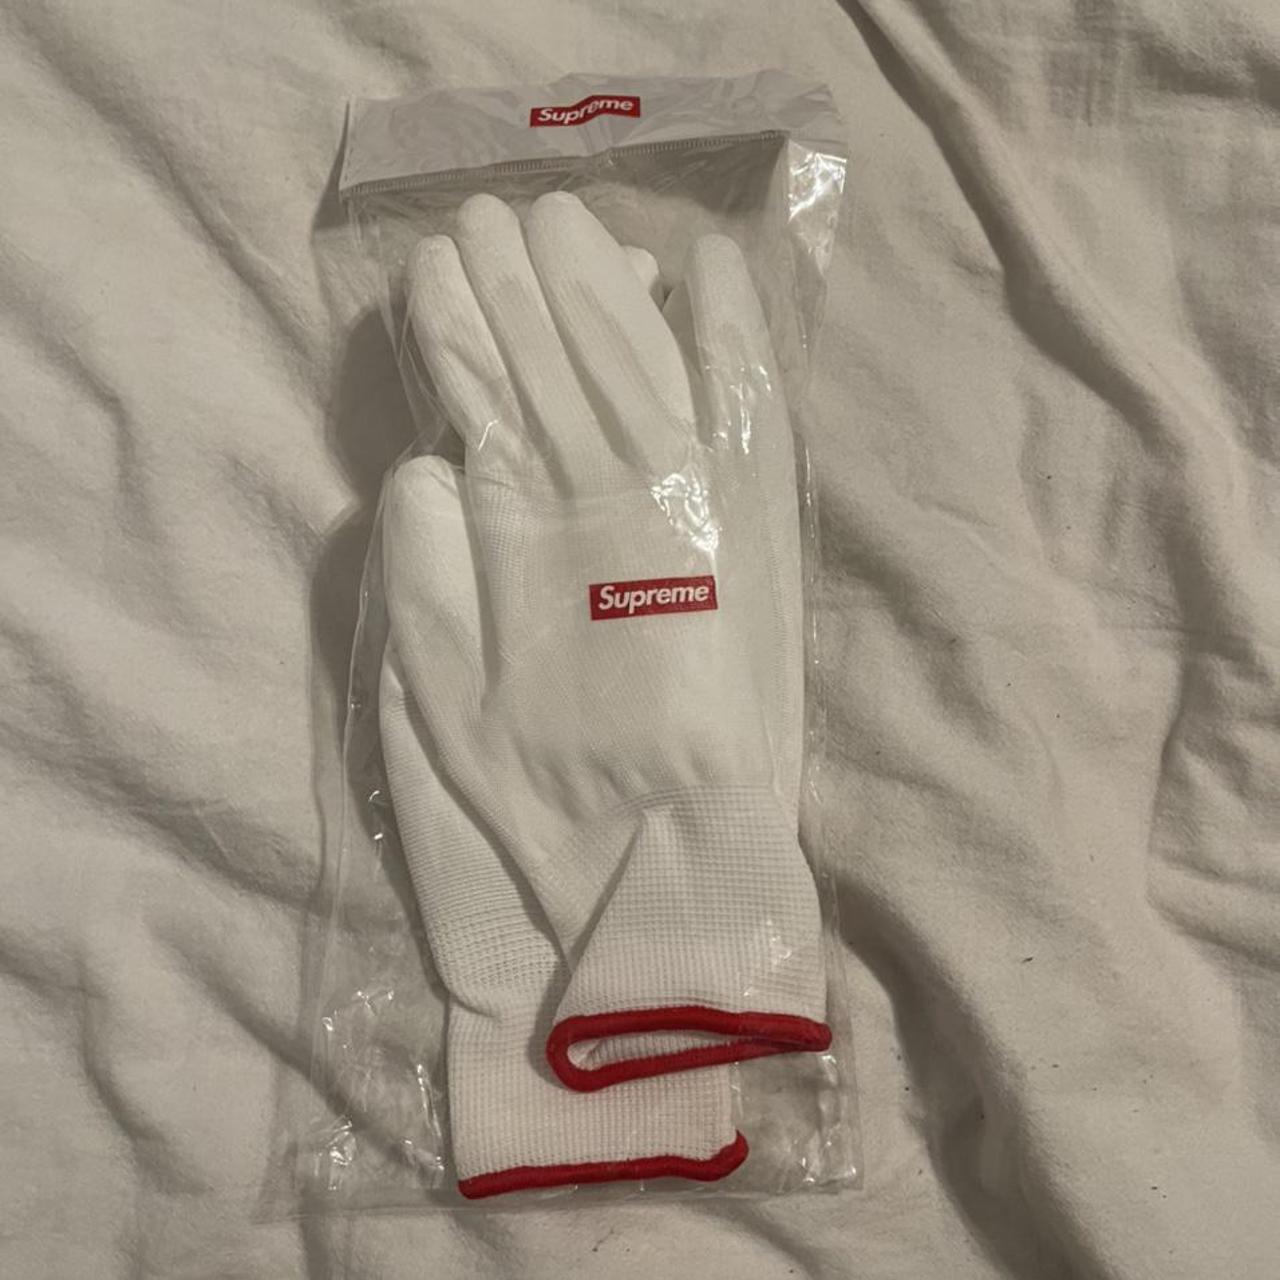 Product Image 1 - supreme gloves. supreme rubberized gloves.